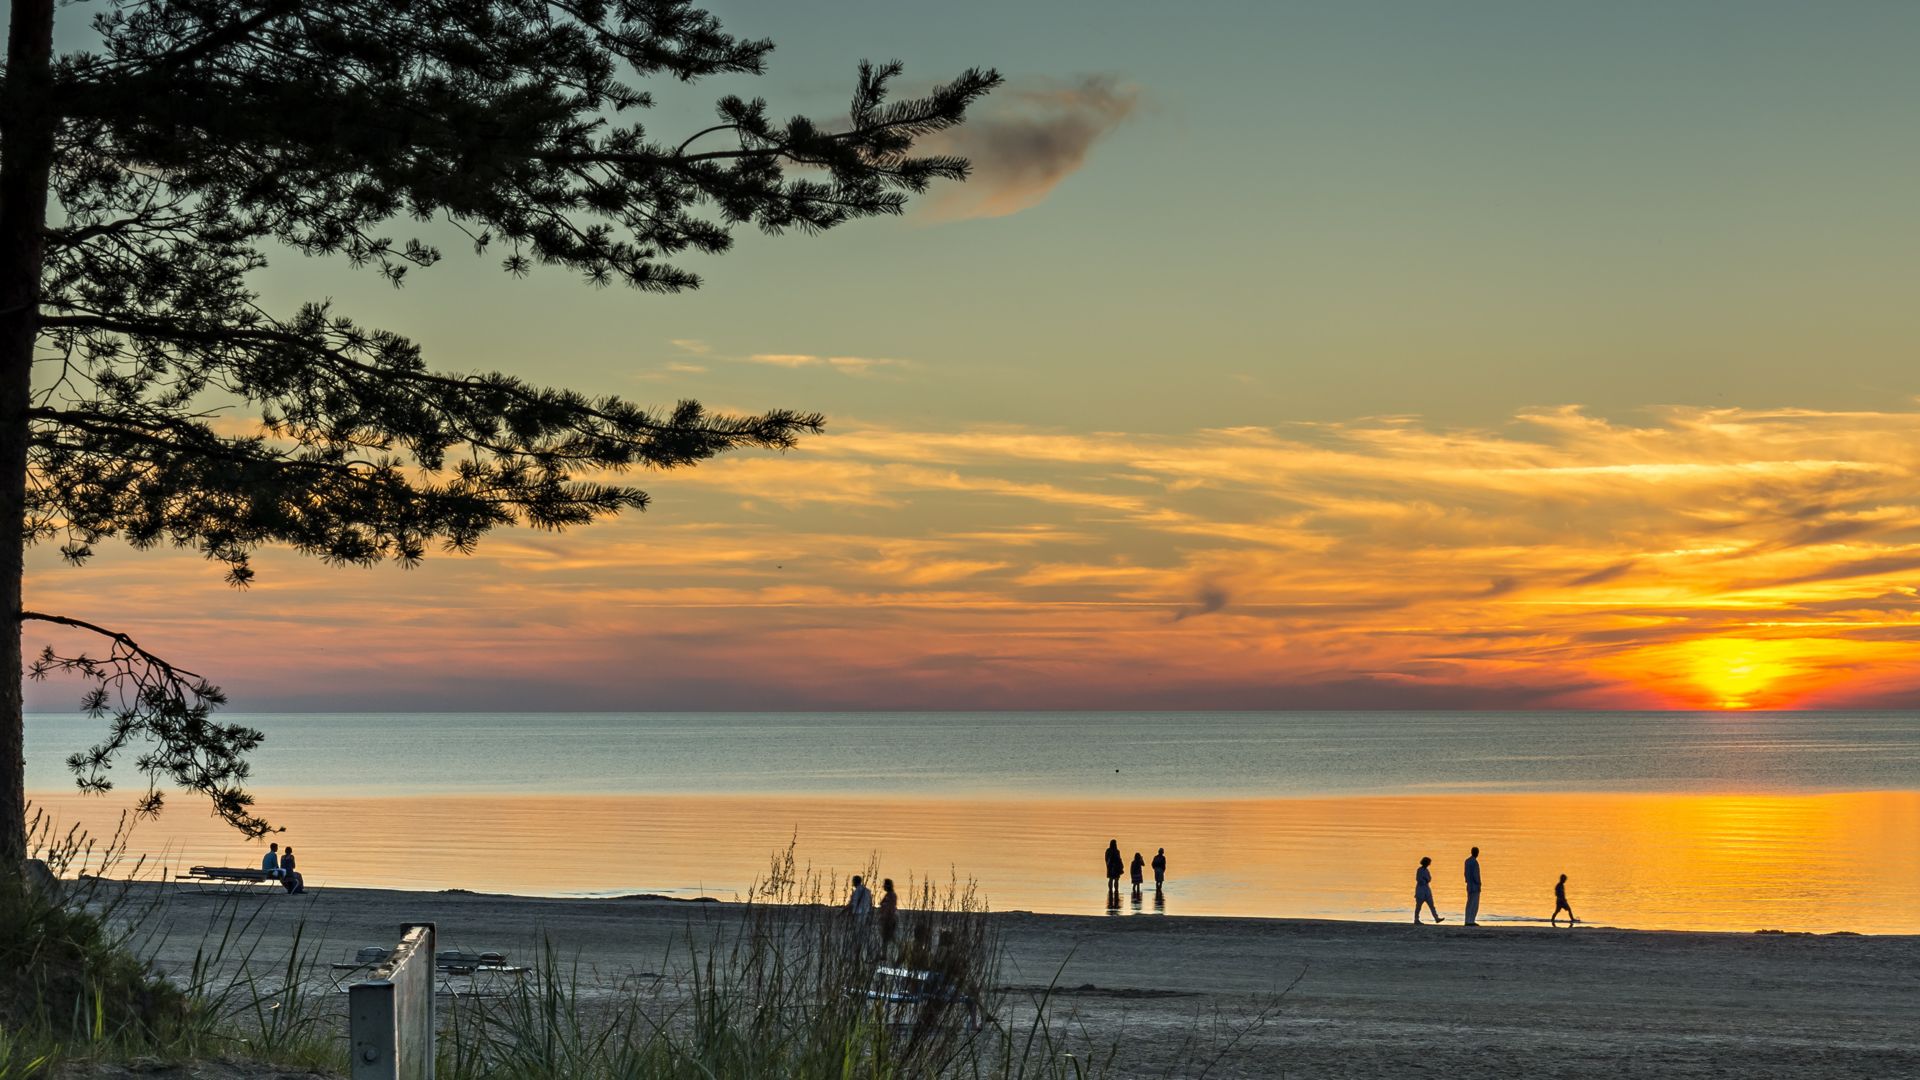 Farbenfroher Sonnenuntergang am Sandstrand von Jurmala – dem berühmten Badeort im Baltikum, Lettland.